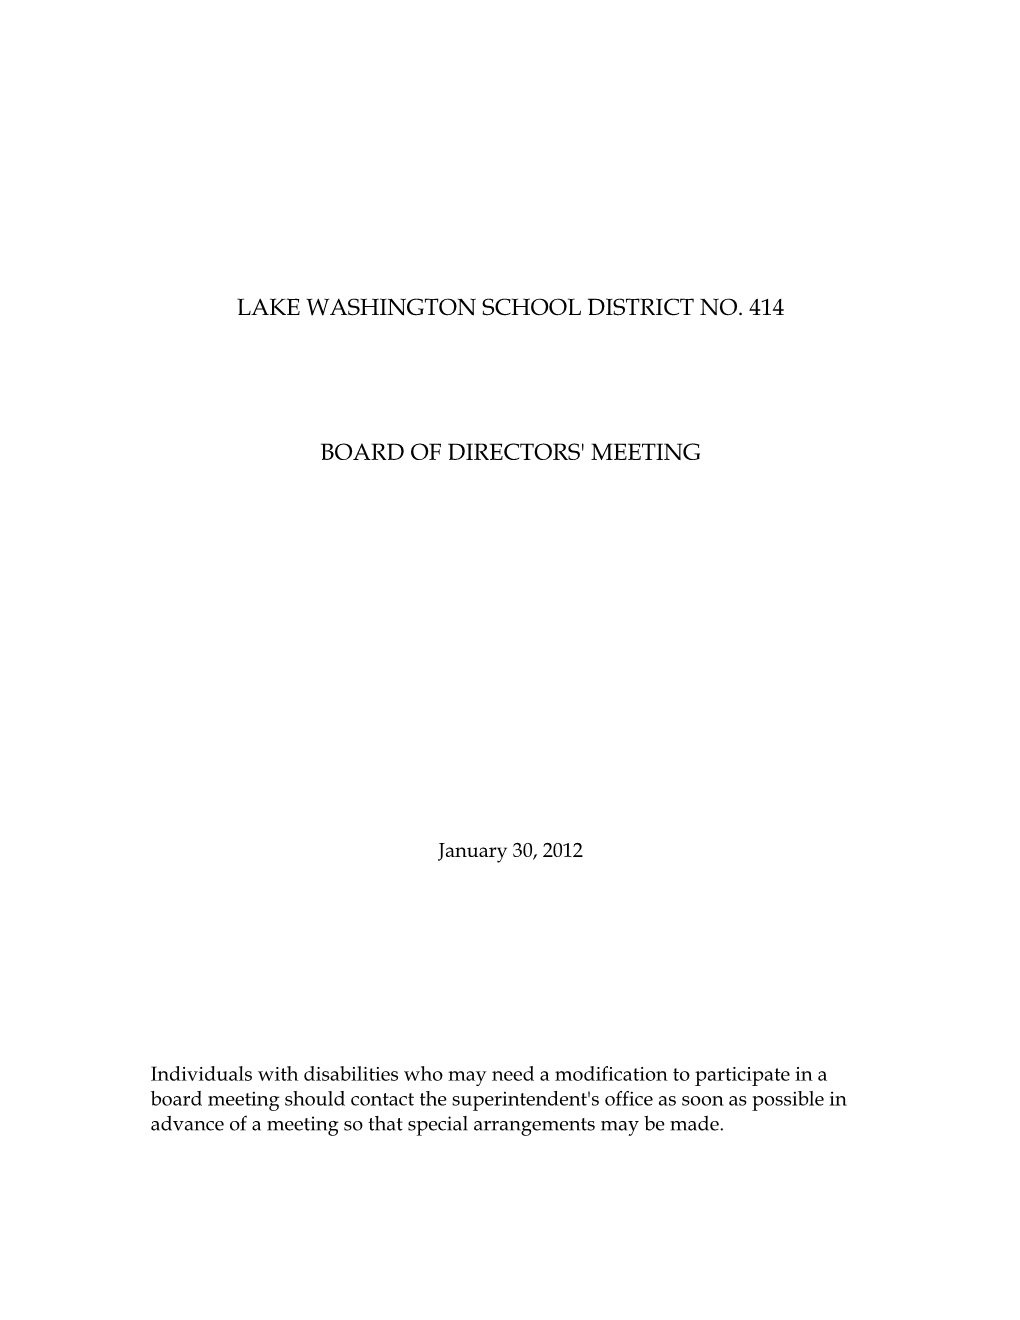 LAKE WASHINGTON SCHOOL DISTRICT NO. 414 Board of Directors' Meeting January 9, 2012